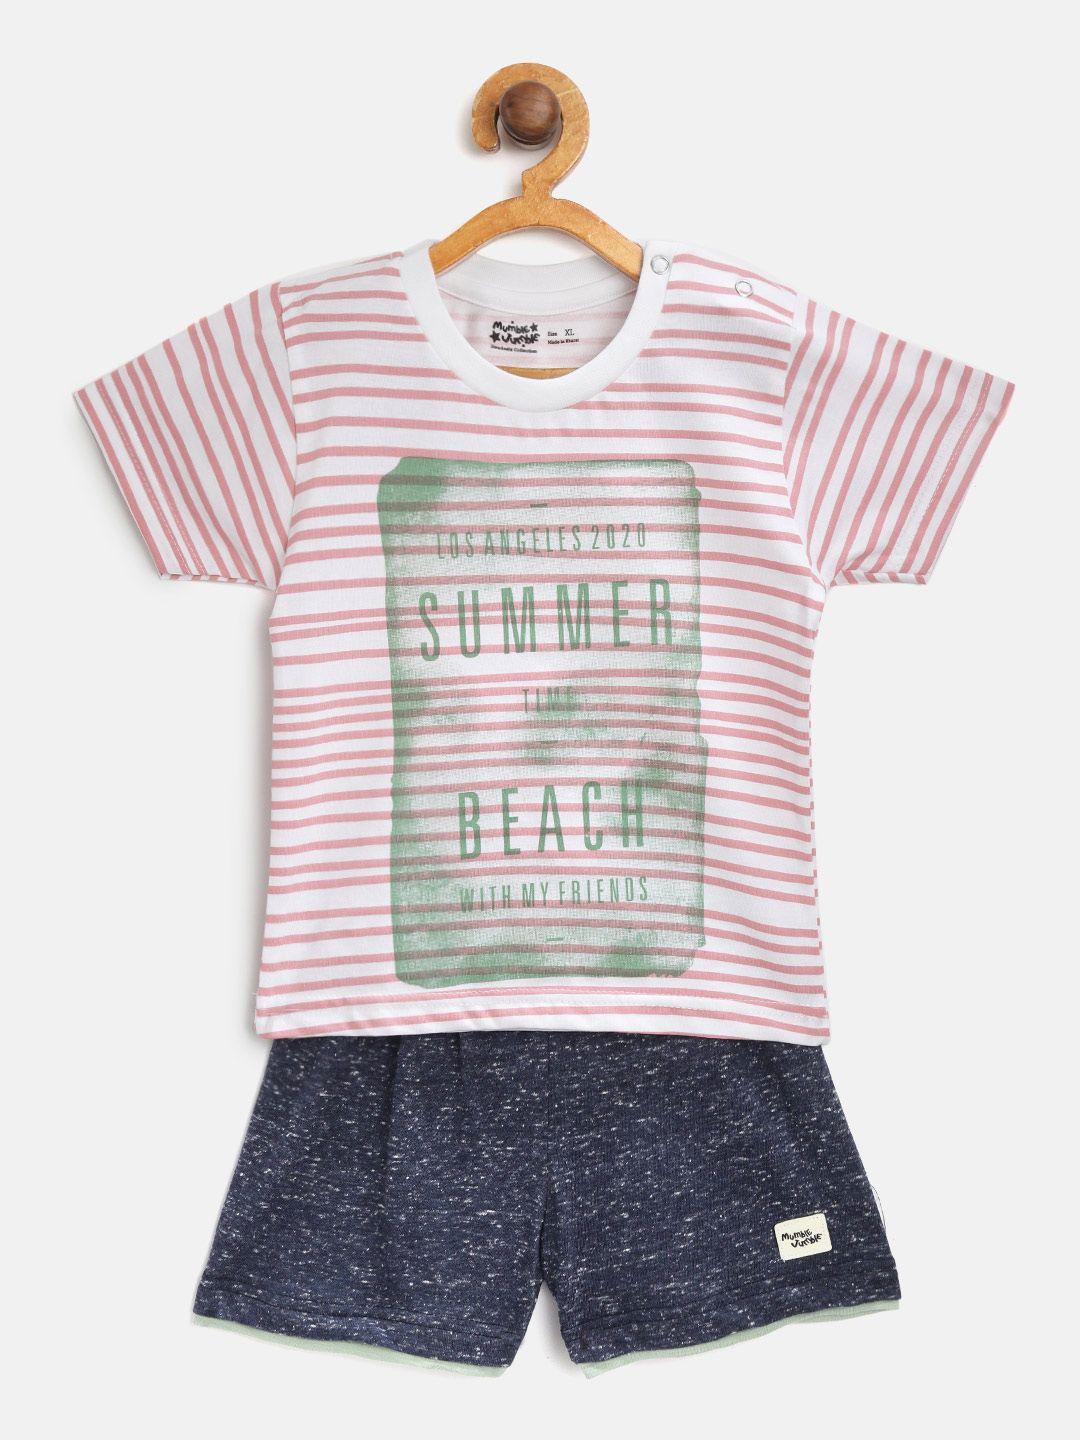 mumble jumble kids pink & navy blue striped t-shirt with shorts